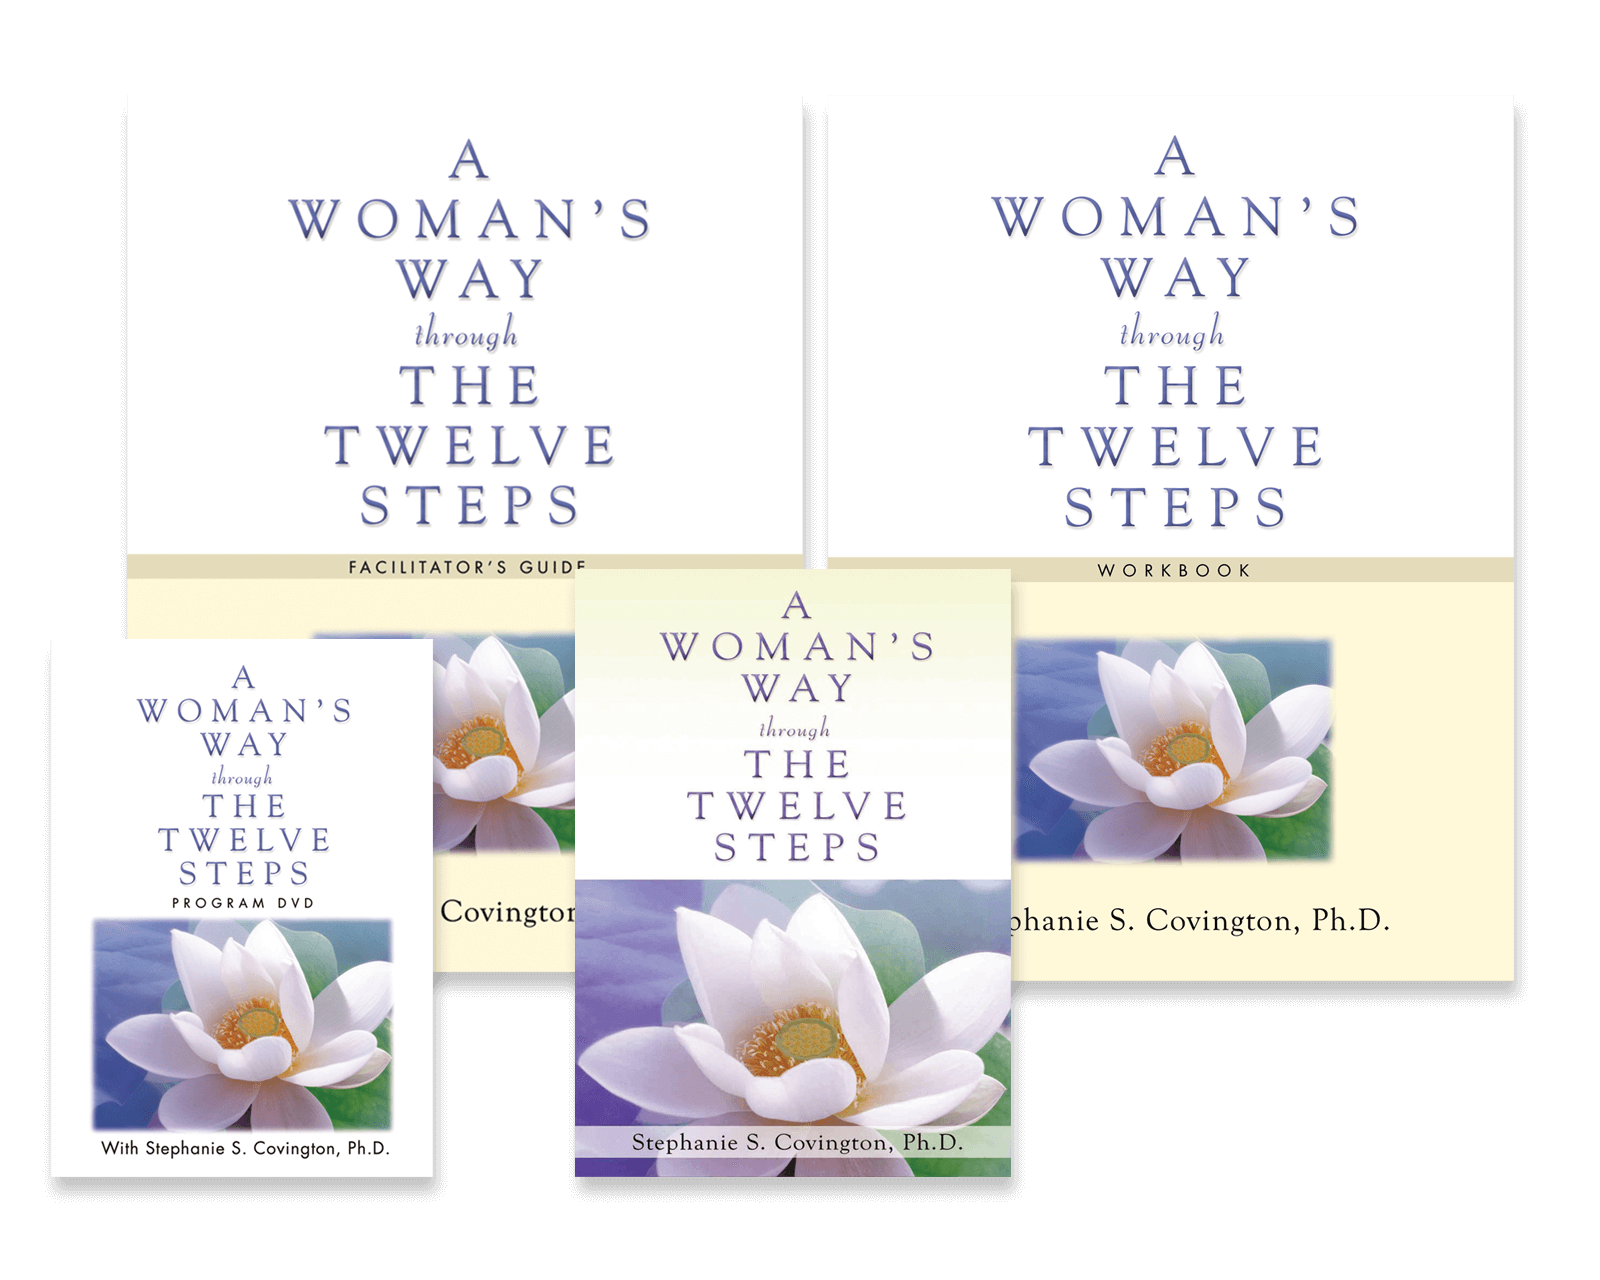 A Woman's Way through The Twelve Steps